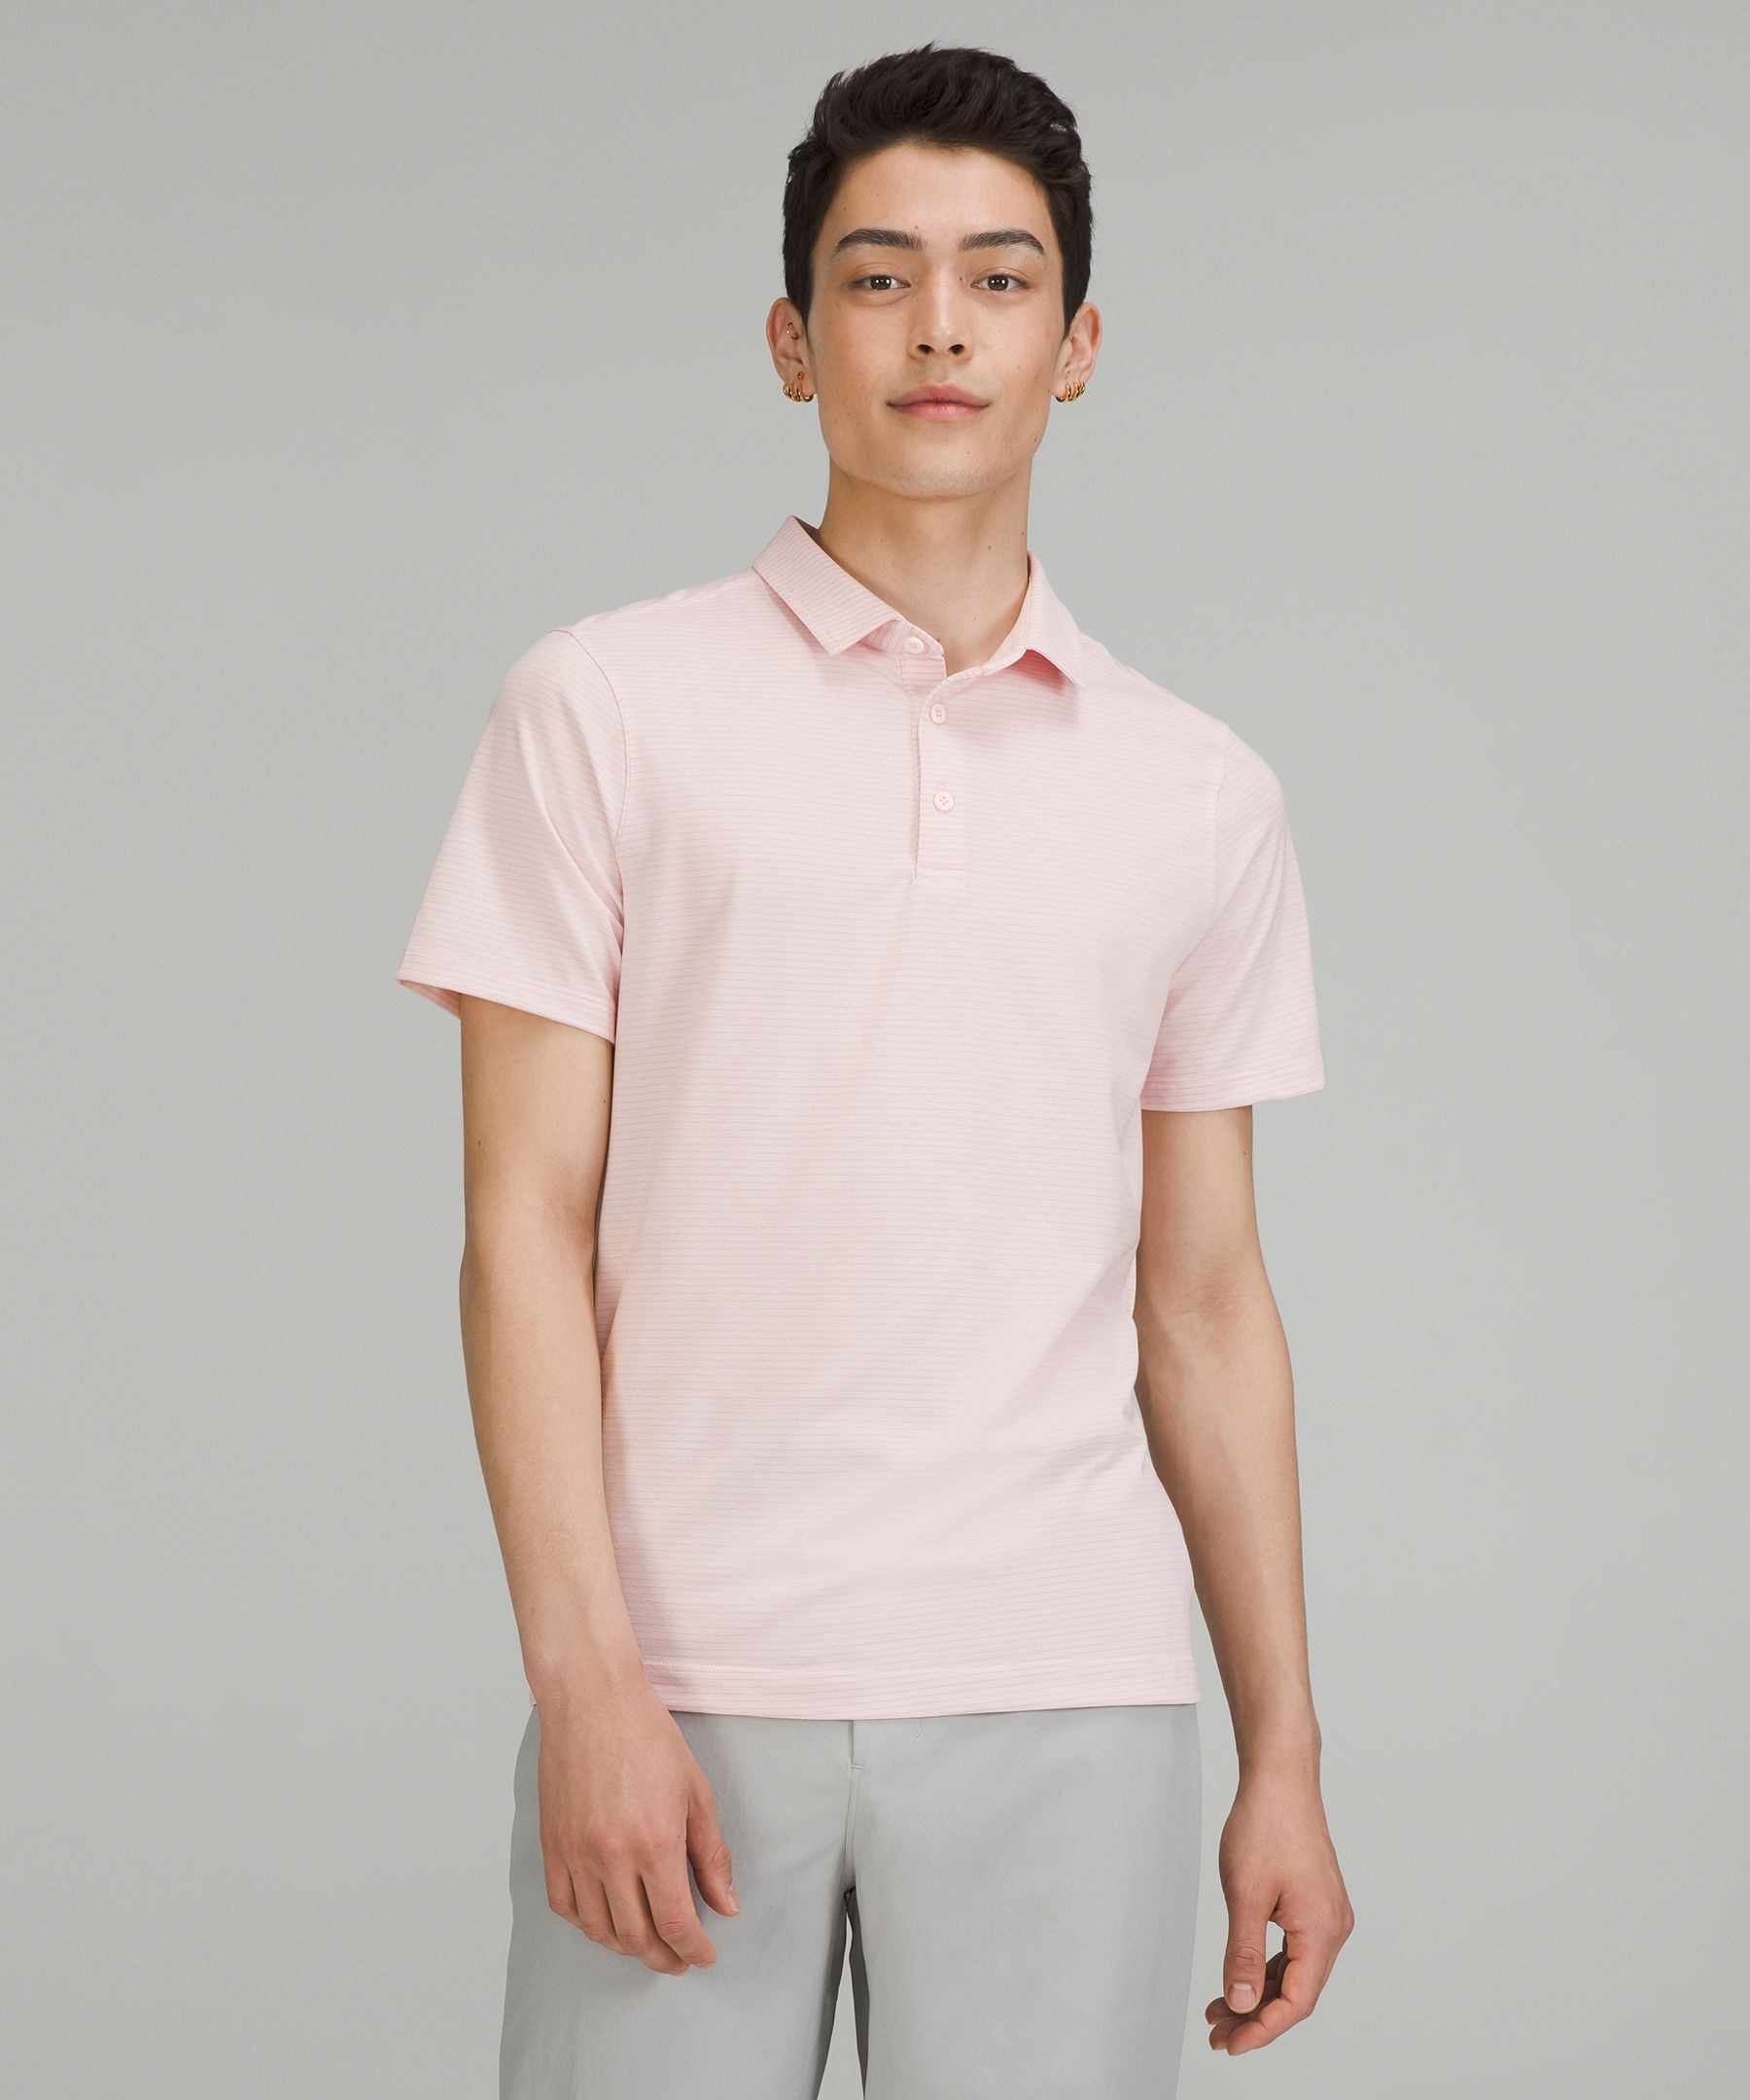 Lululemon Evolution Short Sleeve Polo Shirt In Heathered Strawberry Milkshake